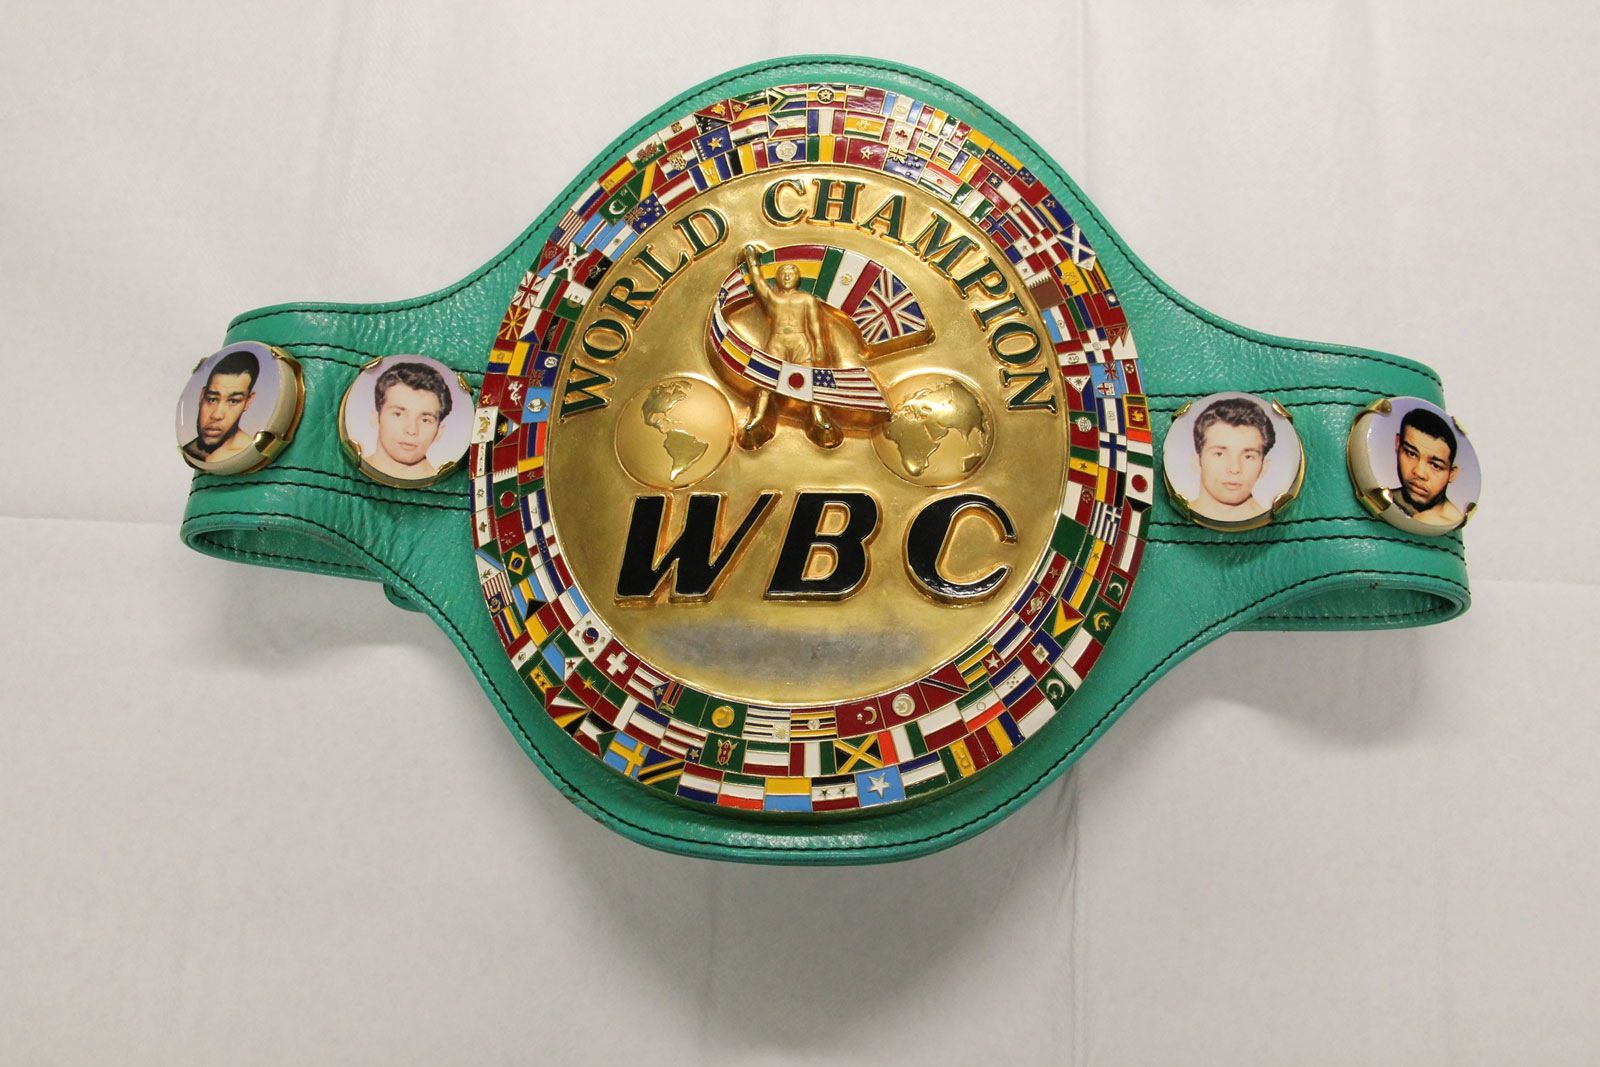 WBC Cintura champ